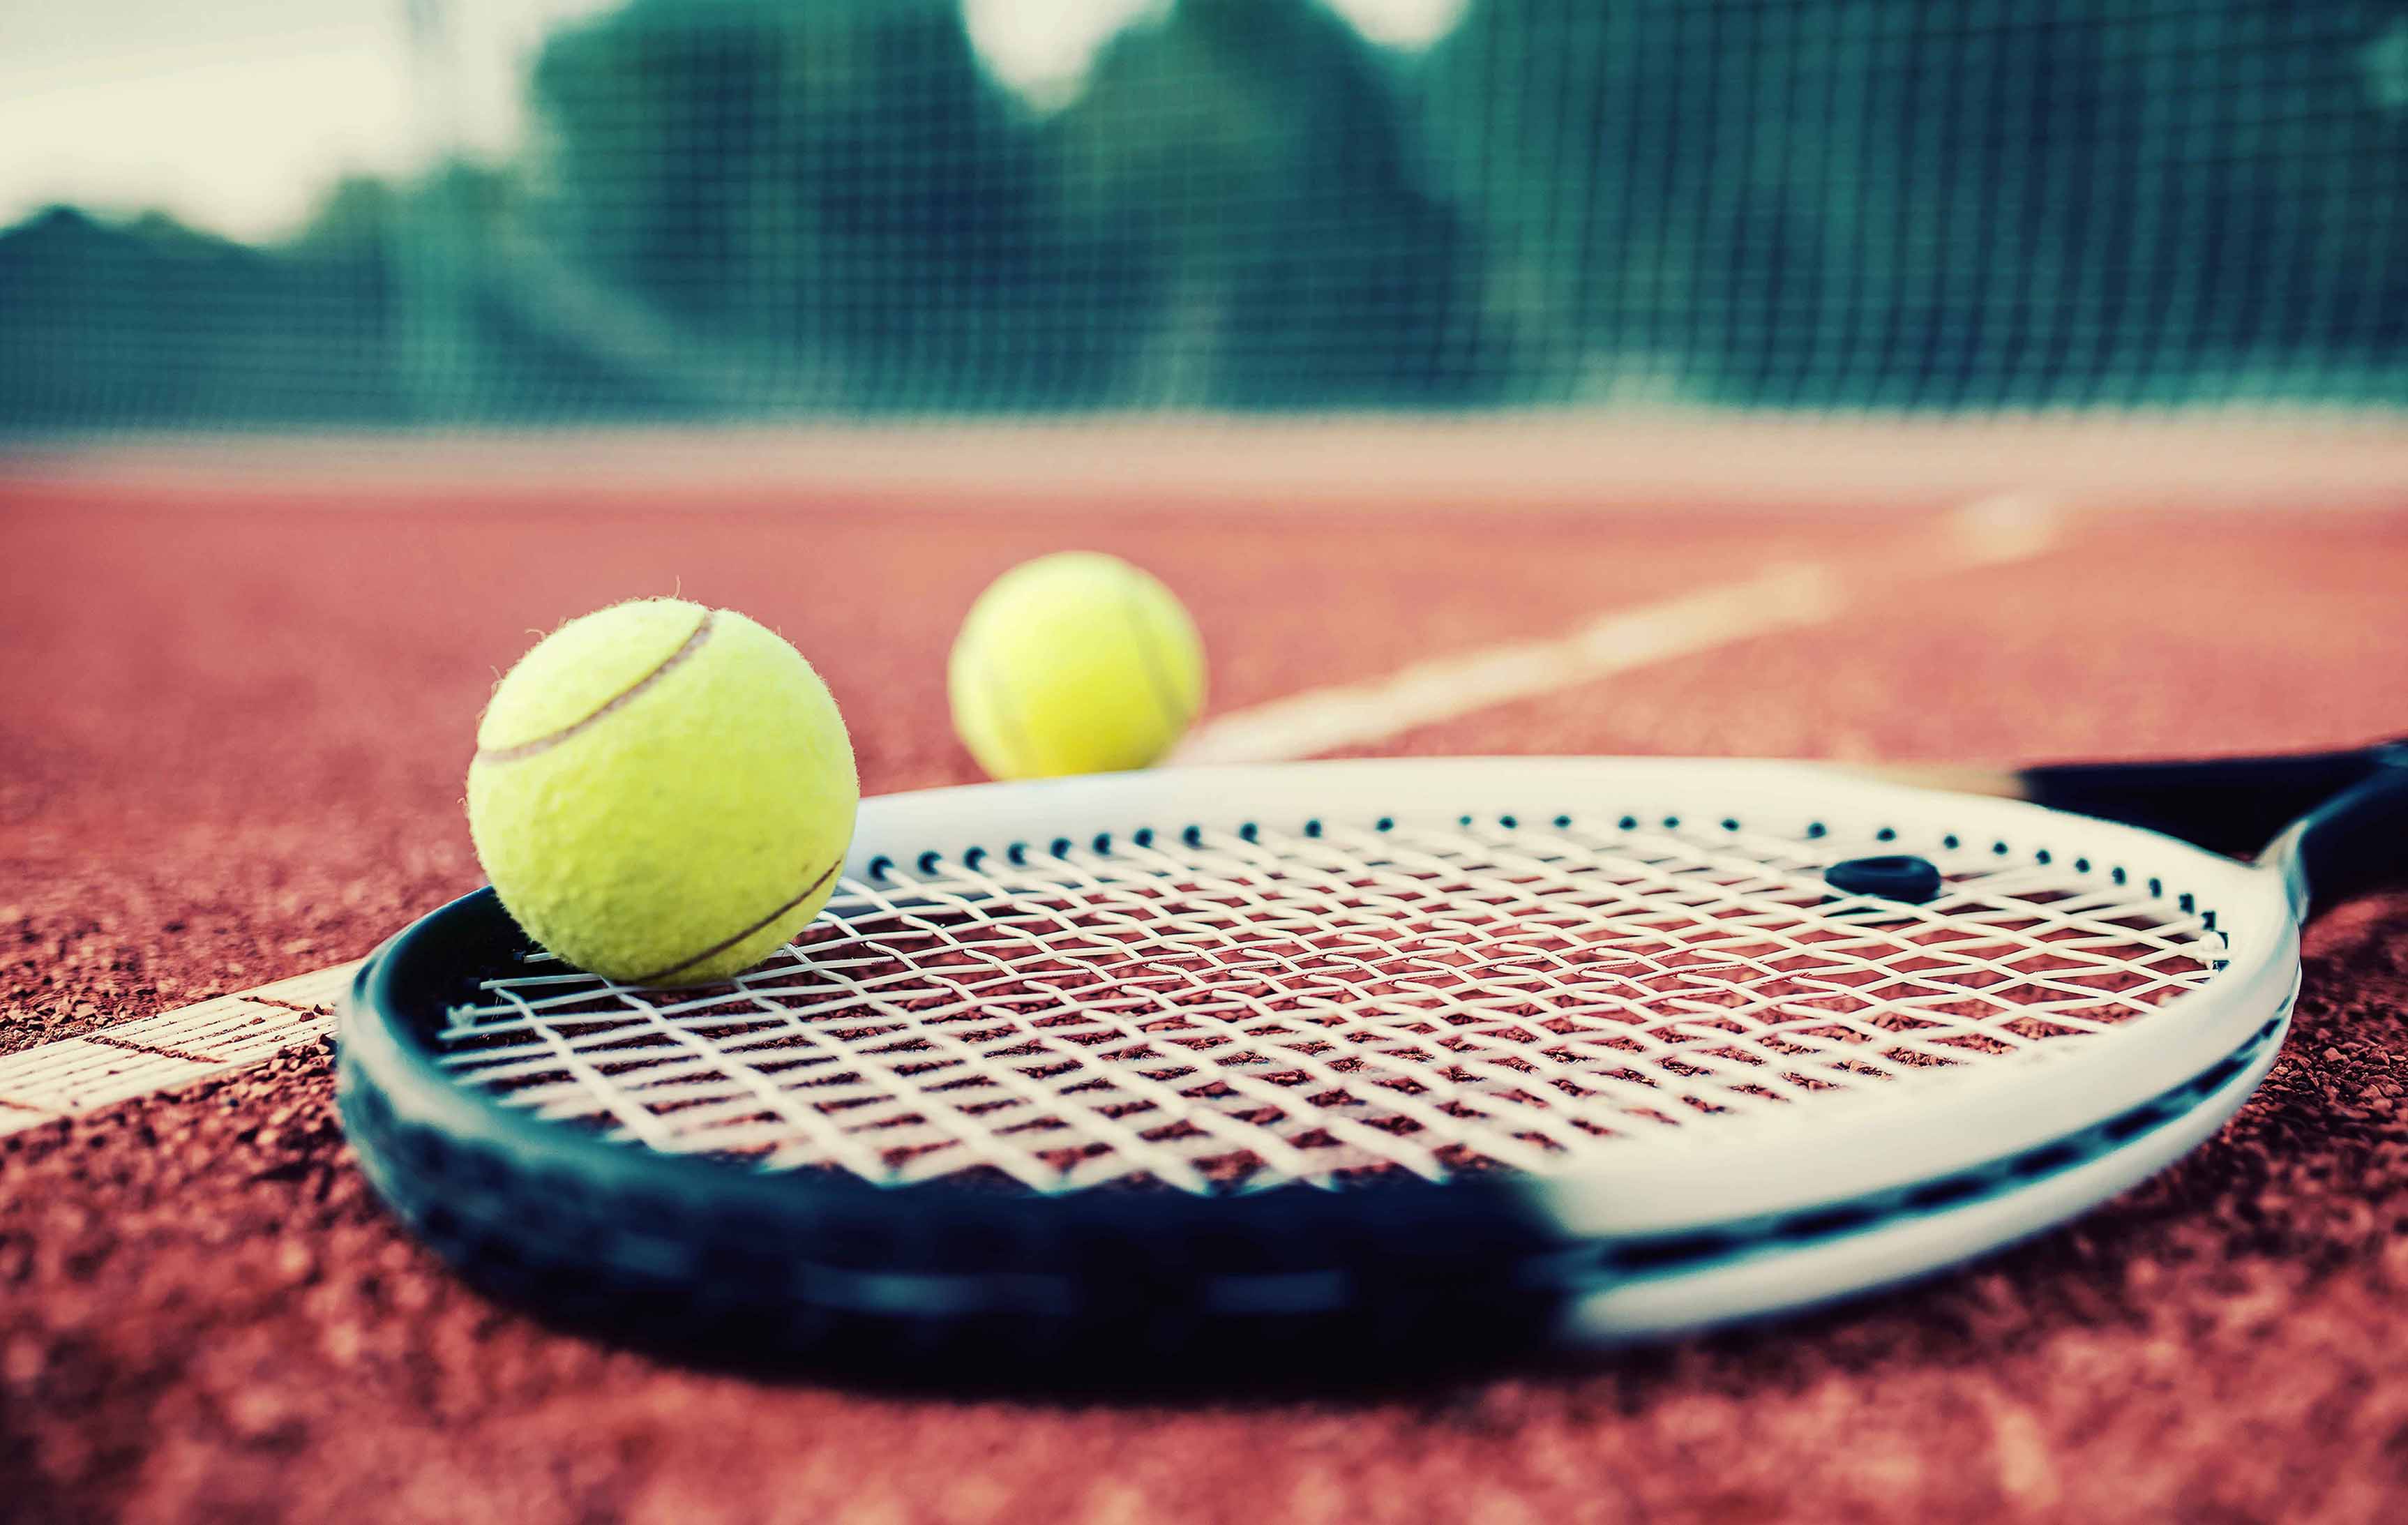 tennis equipment sitting on a court